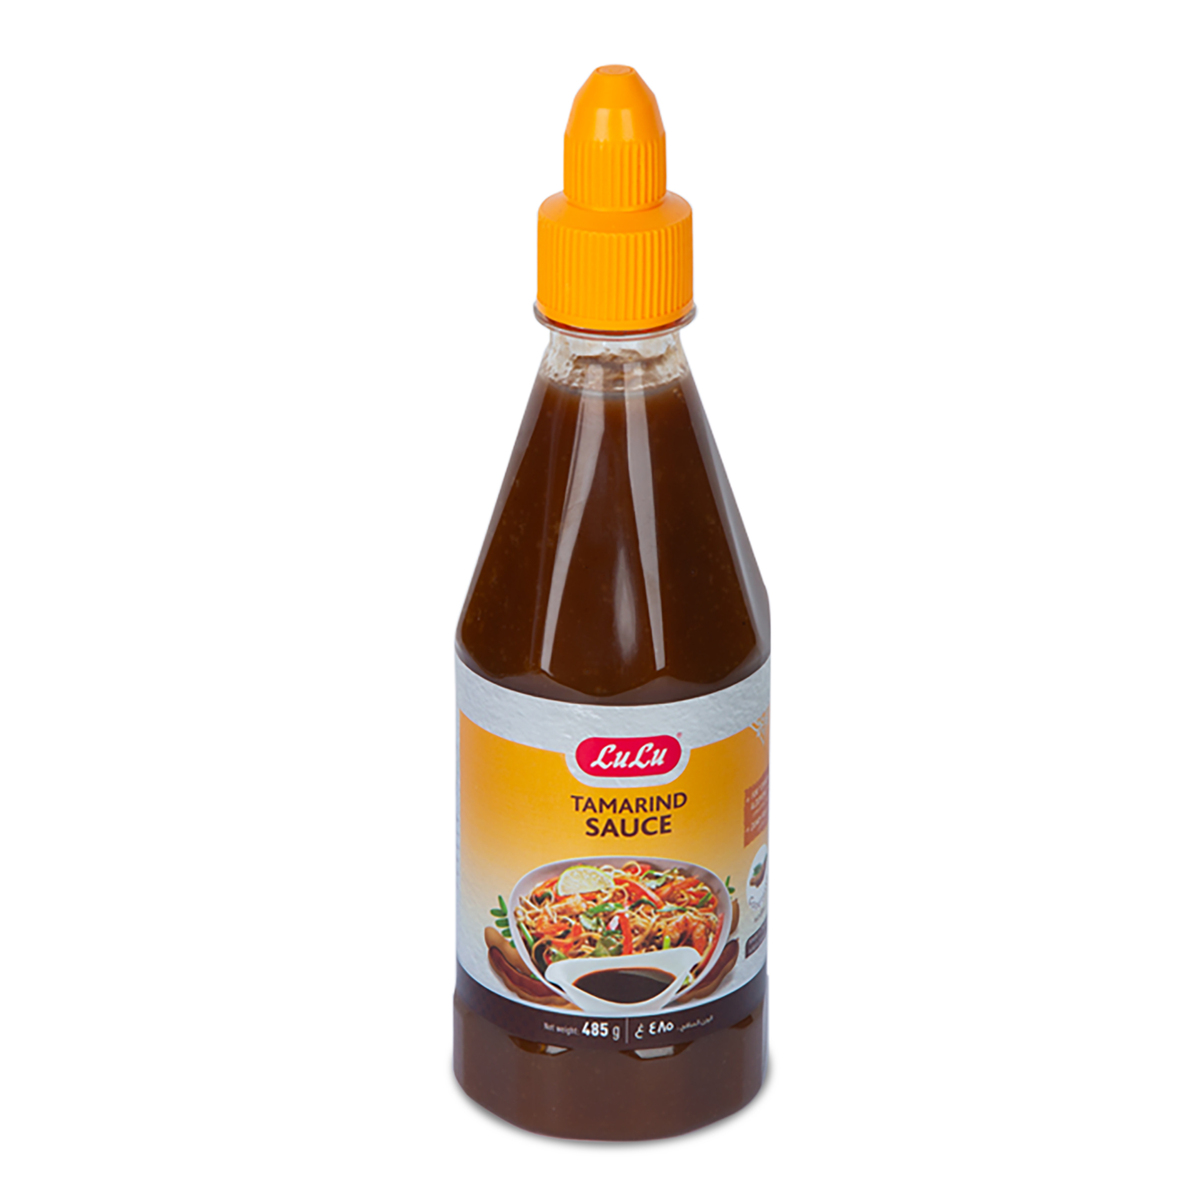 LuLu Tamarind Sauce, 485 g